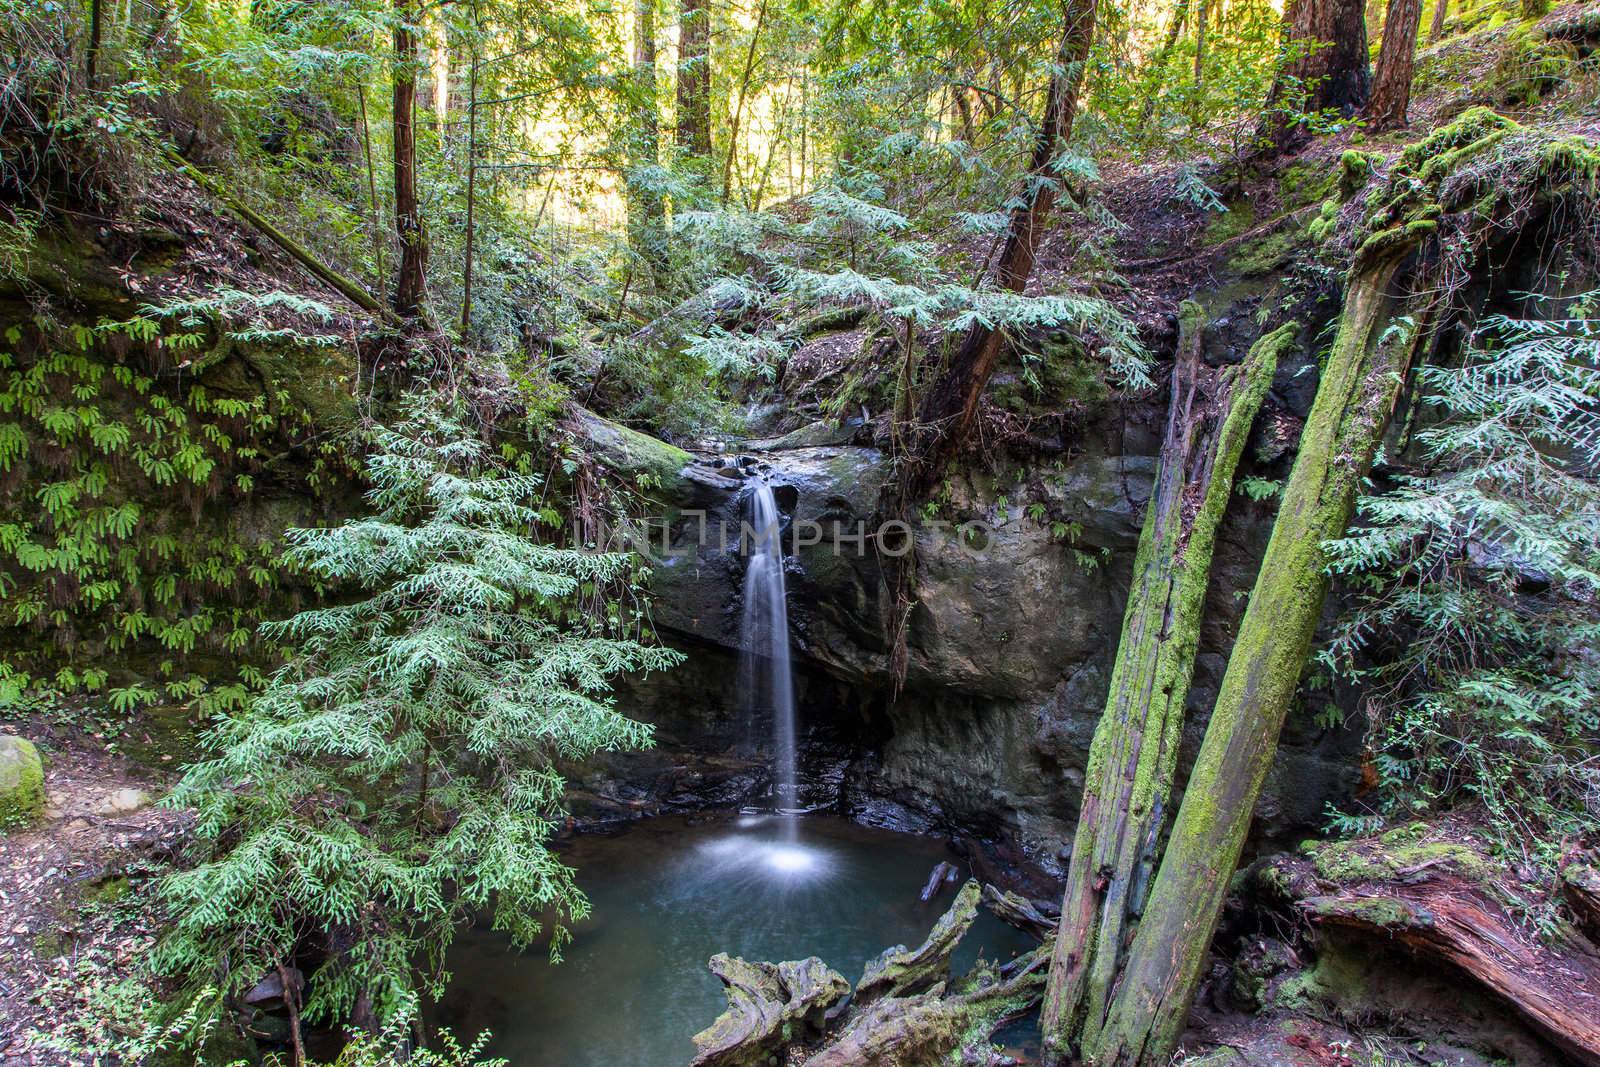 Tranquil Scene at Sempervirens Falls in Big Basin Redwoods State Park, California.